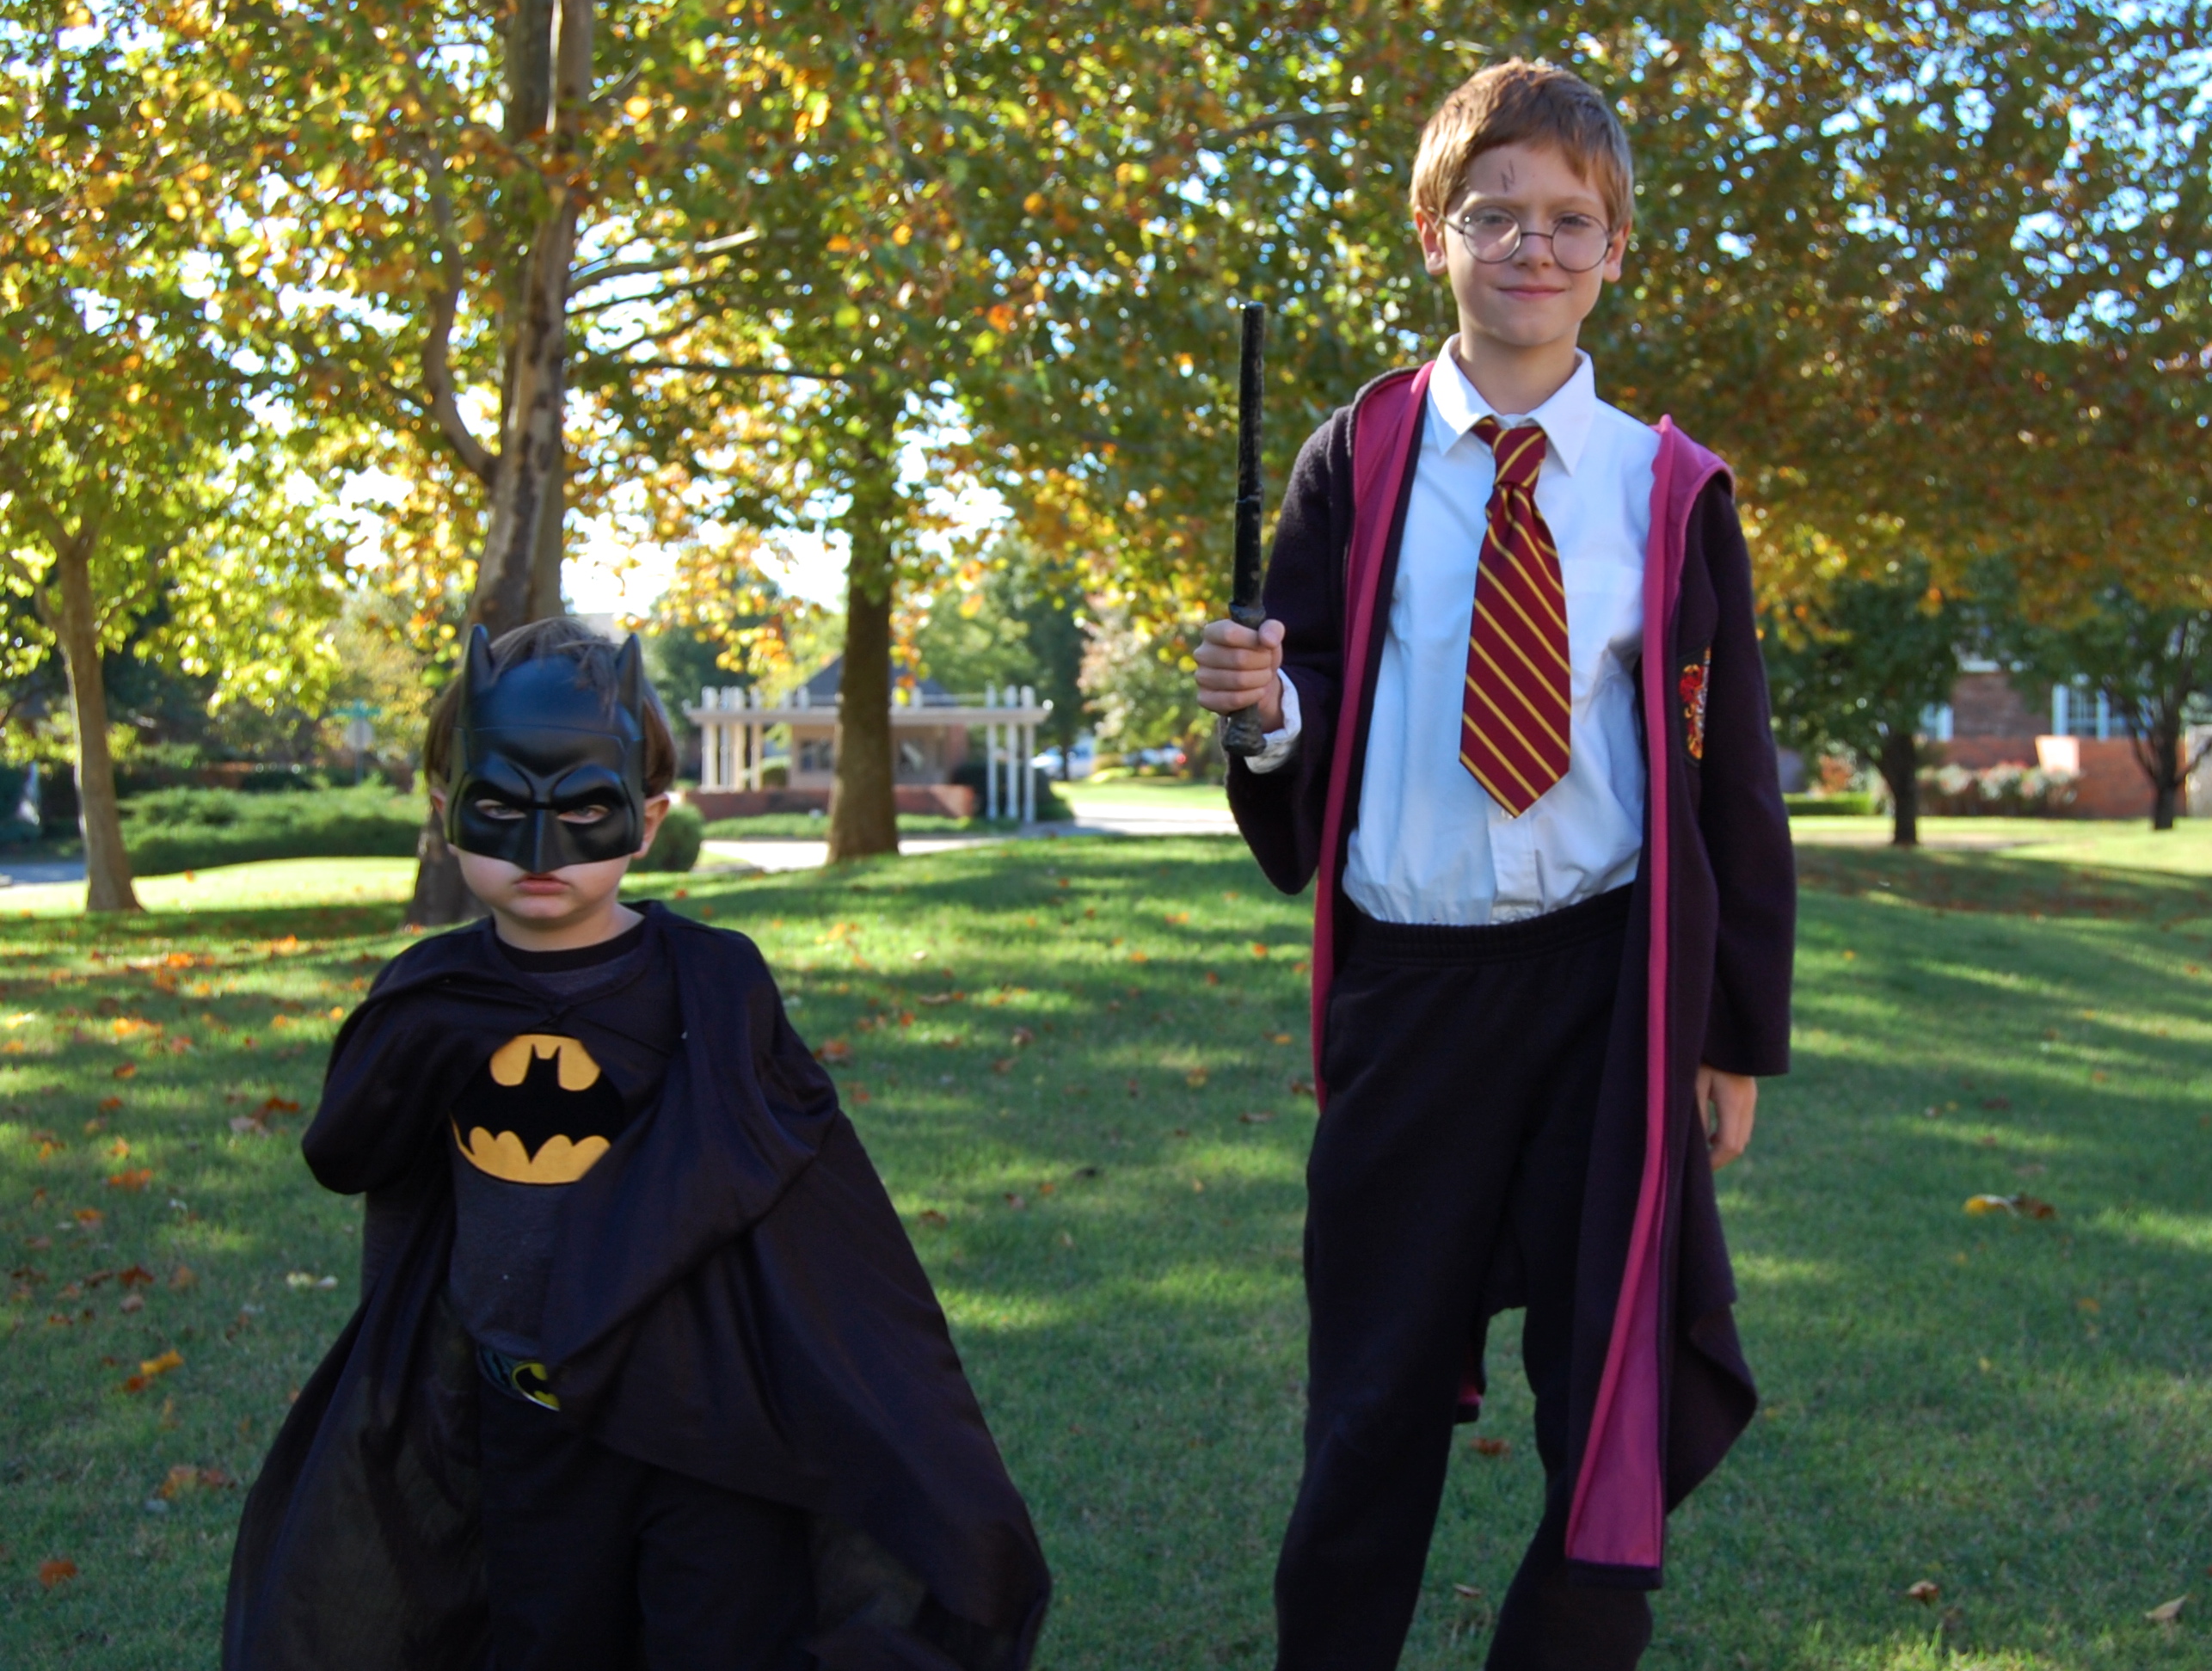 Bat Man and Harry Potter Halloween costumes